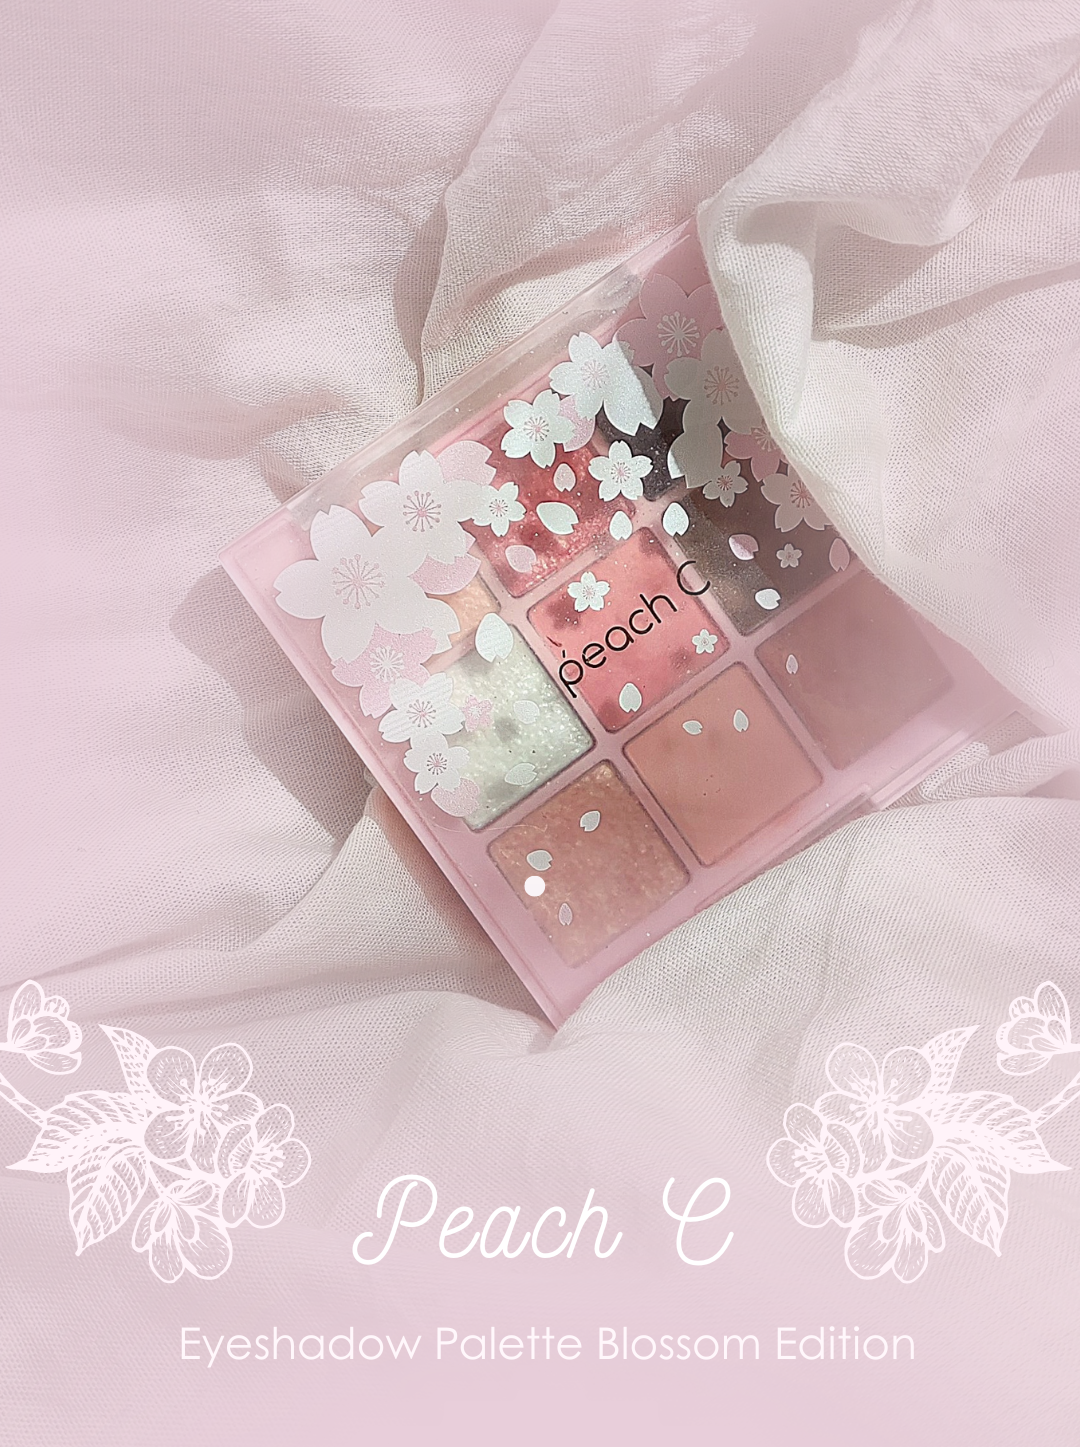 Peach C Eyeshadow Palette Blossom Edition review